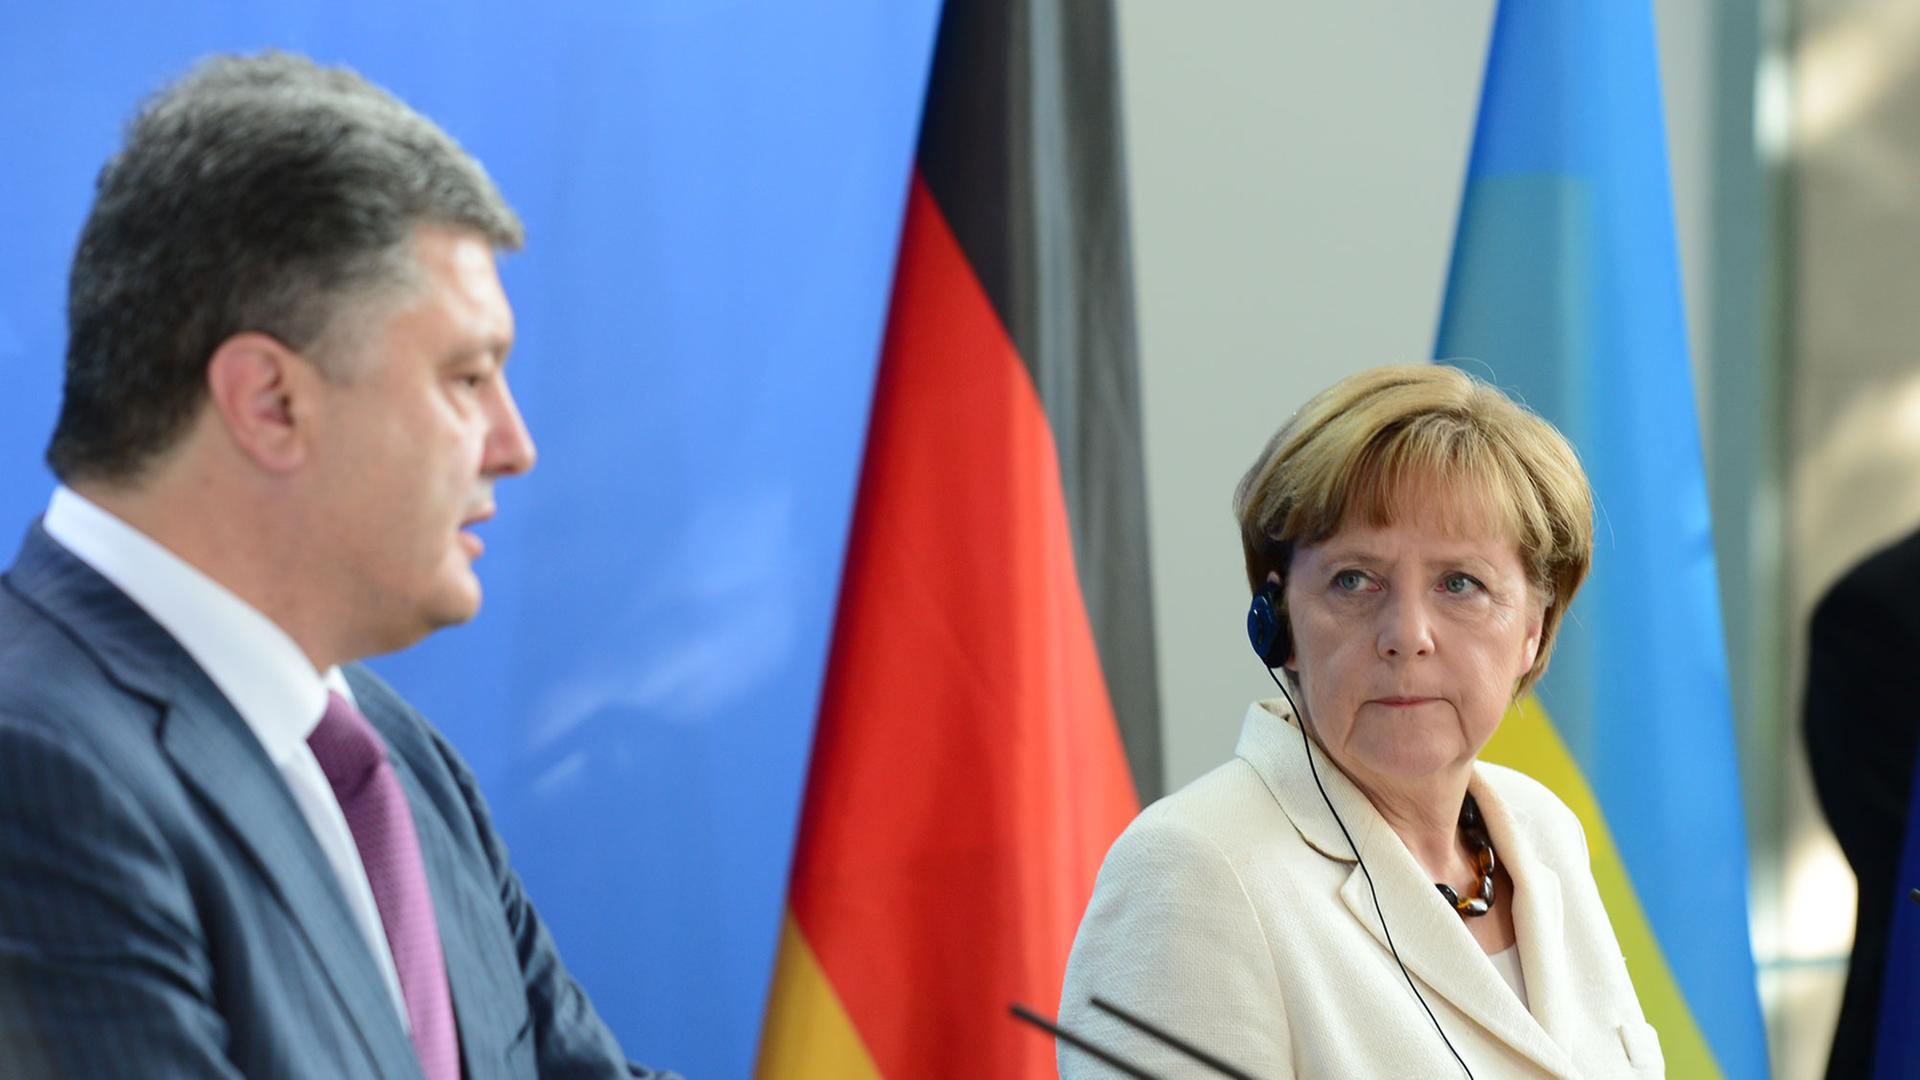 Bundeskanzlerin Angela Merkel und Ukraines Staatspräsident Petro Poroschenko